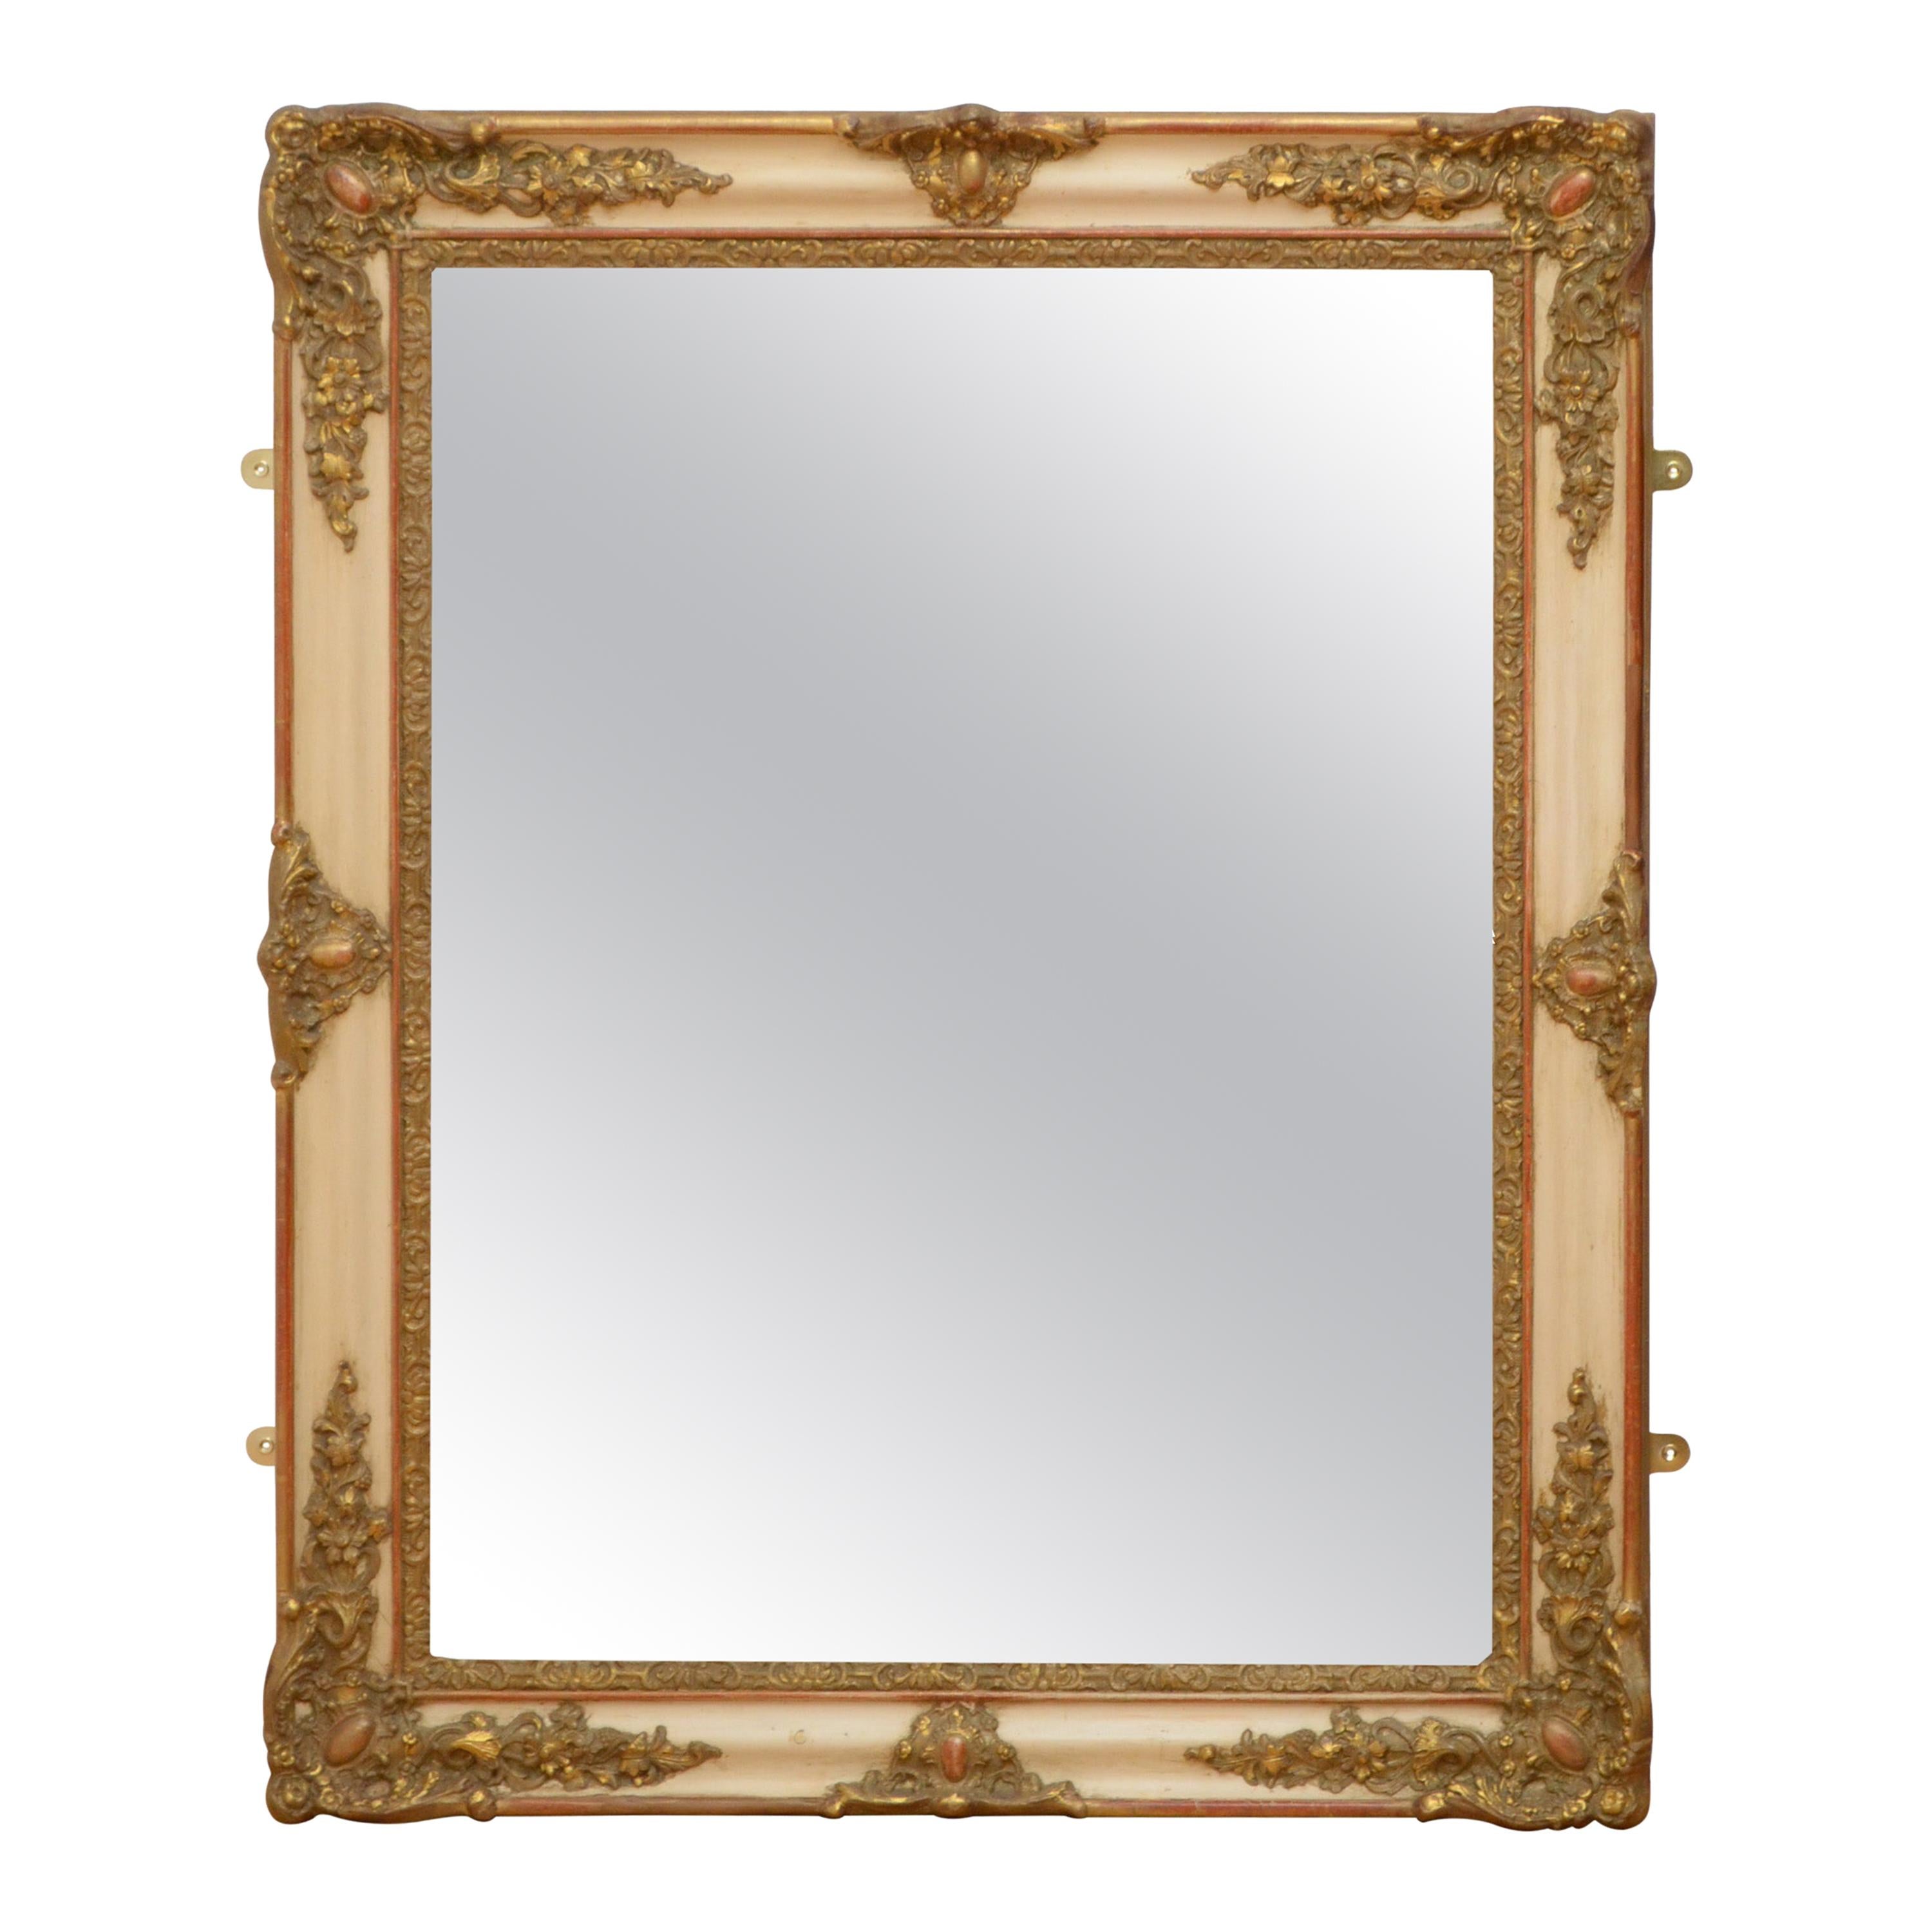 Elegant 19th Century Gilt Mirror